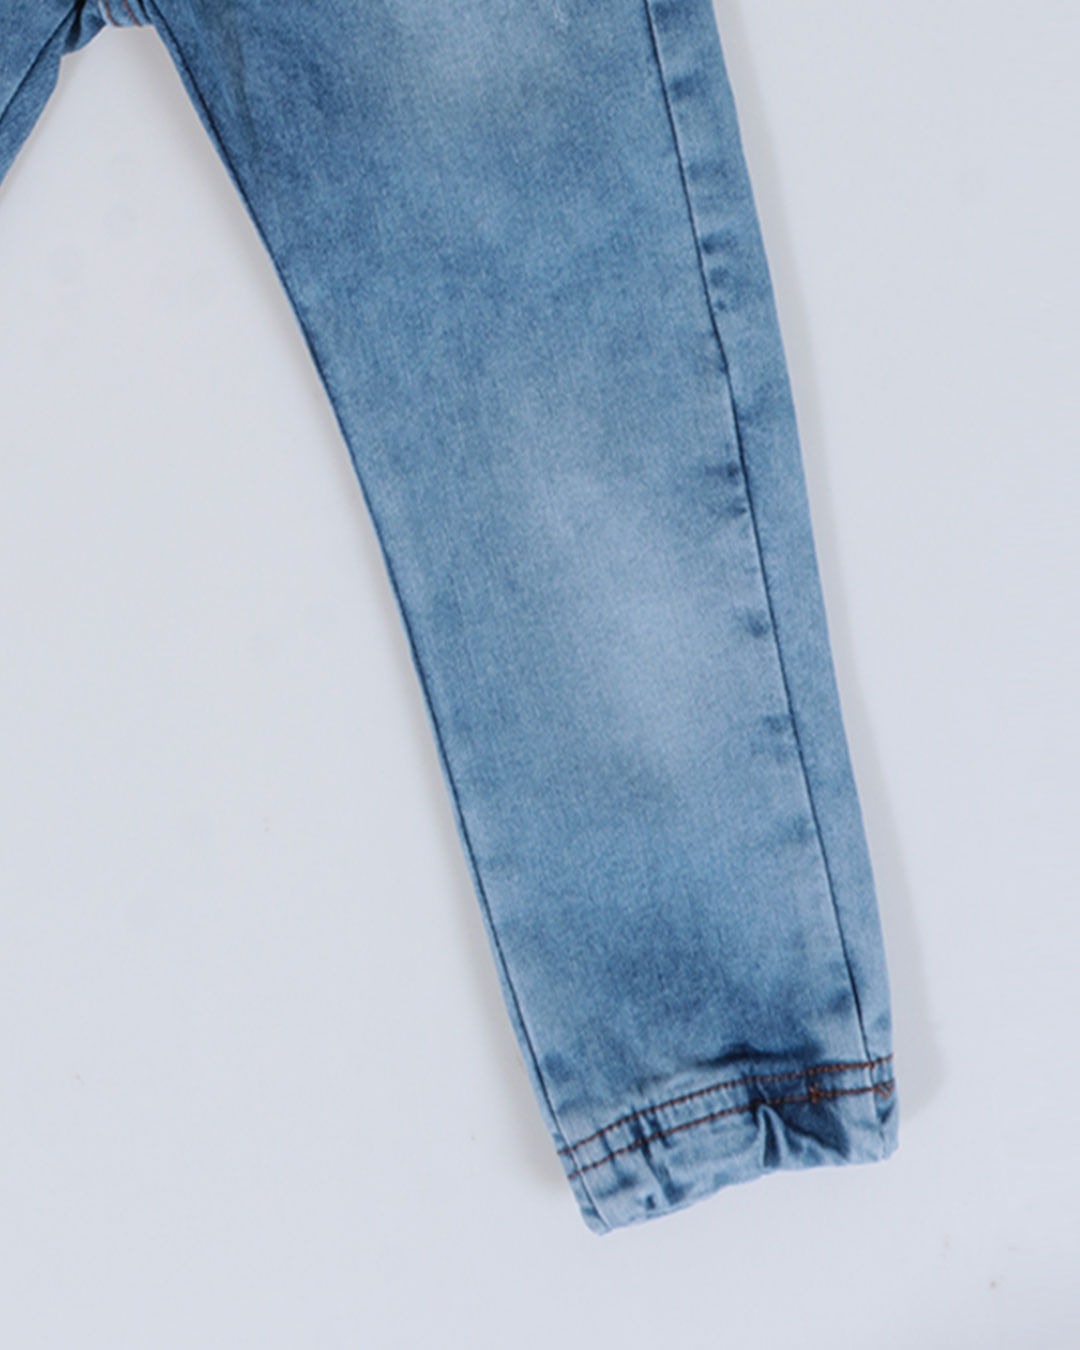 Jogger-Jeans-3561-Masc-13-Ls---Blue-Jeans-Claro